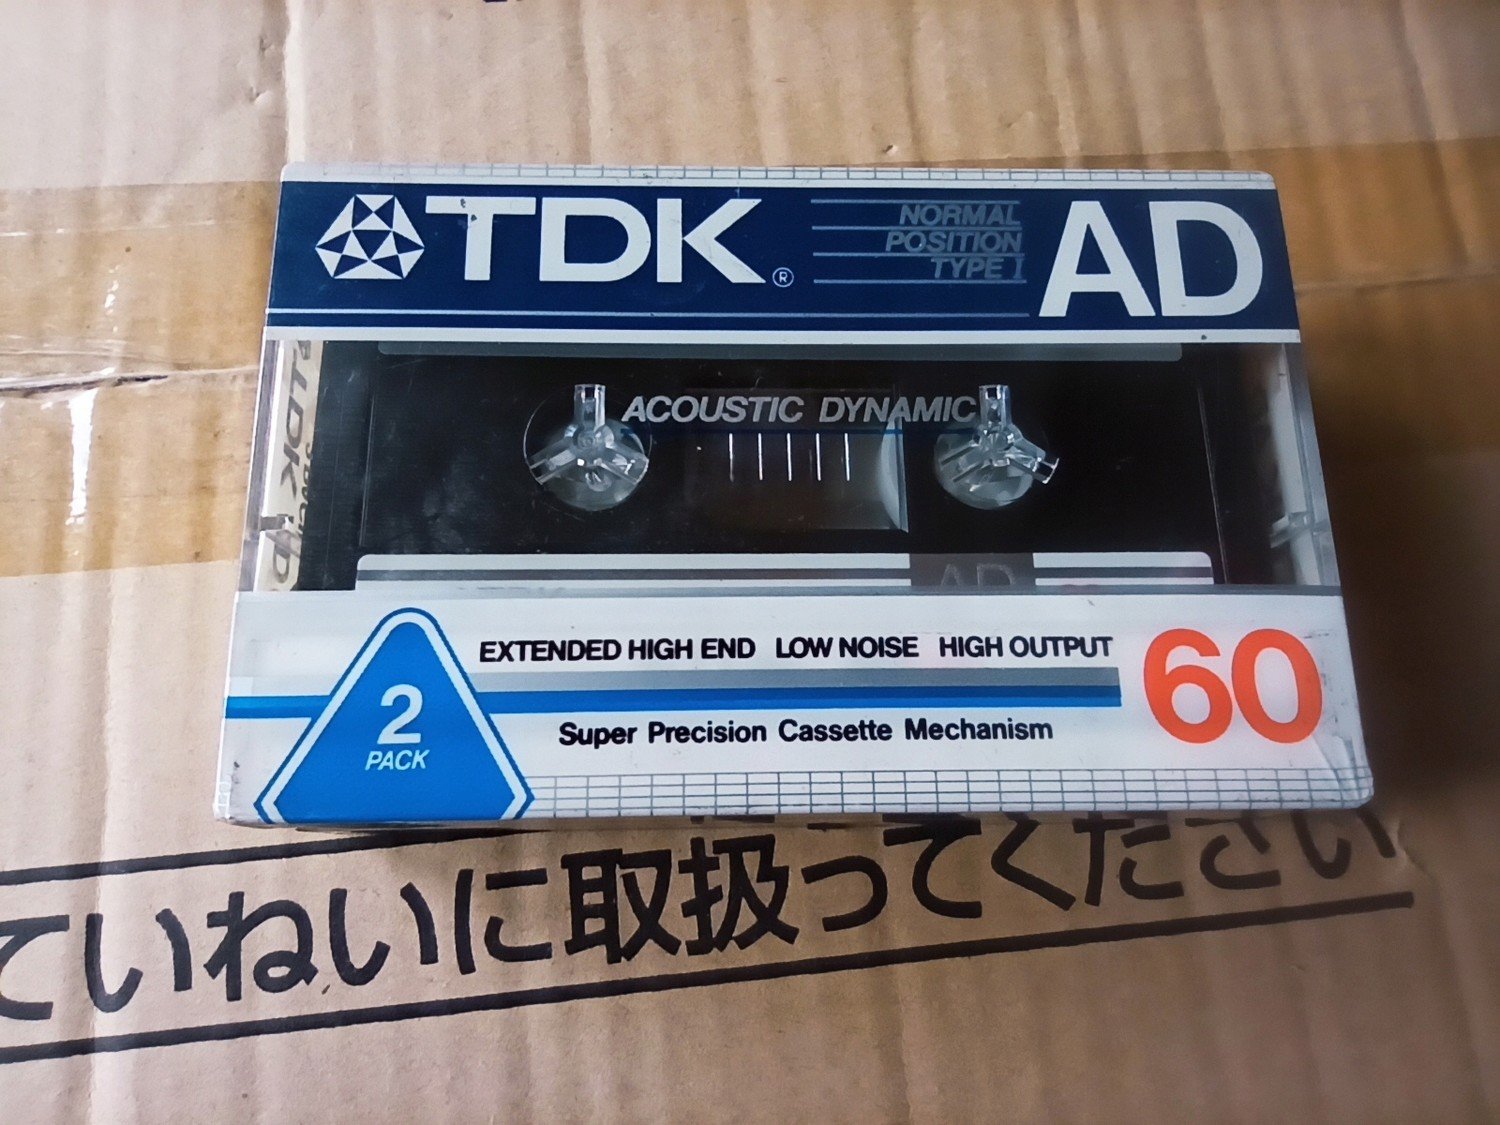 Tdk Ad 60 1984r. Nová Japan 2ks-2pack